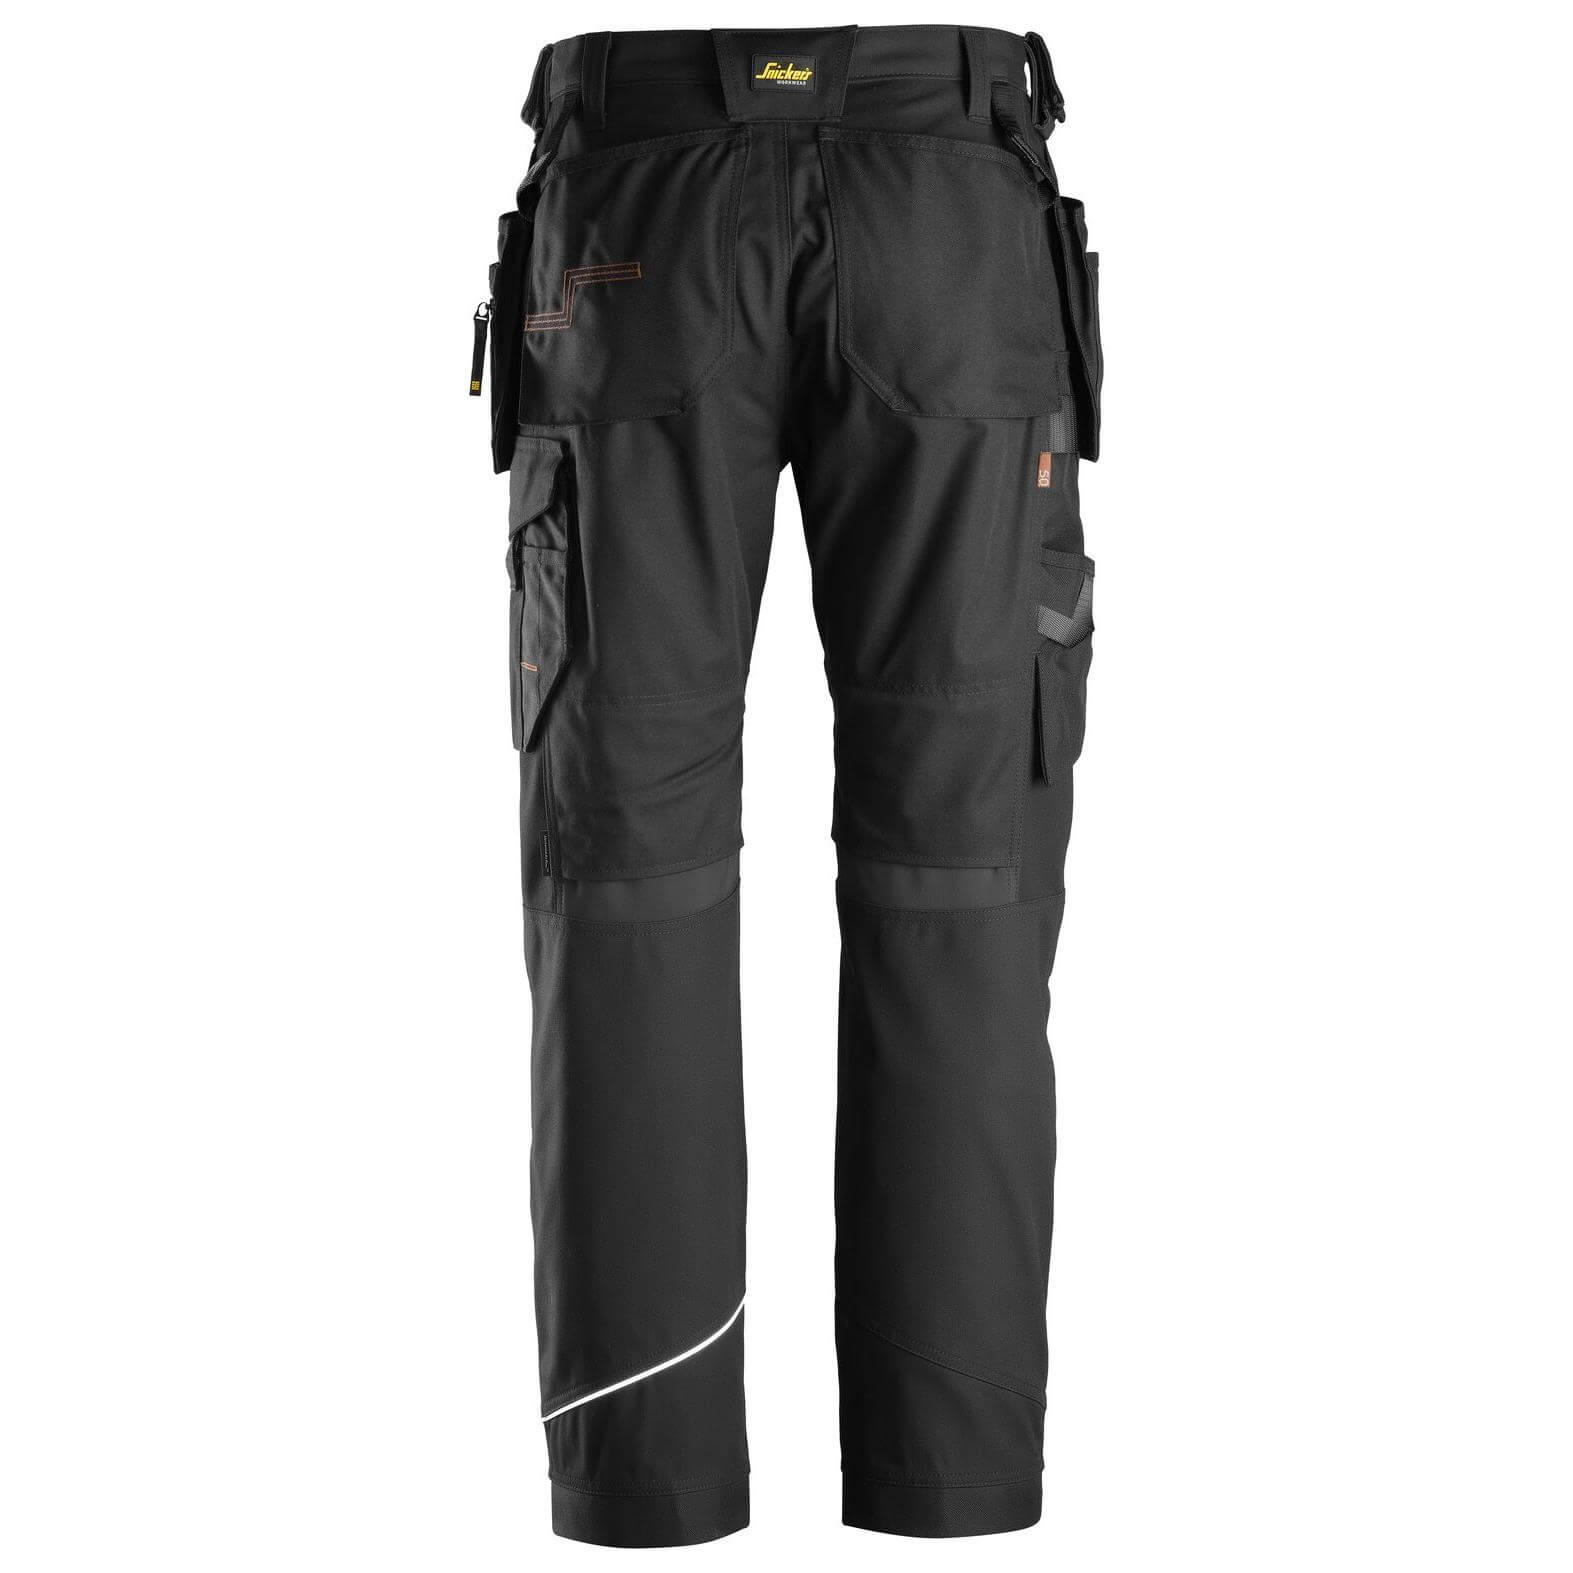 Cordura Durable Work Pants Regular Size WP09